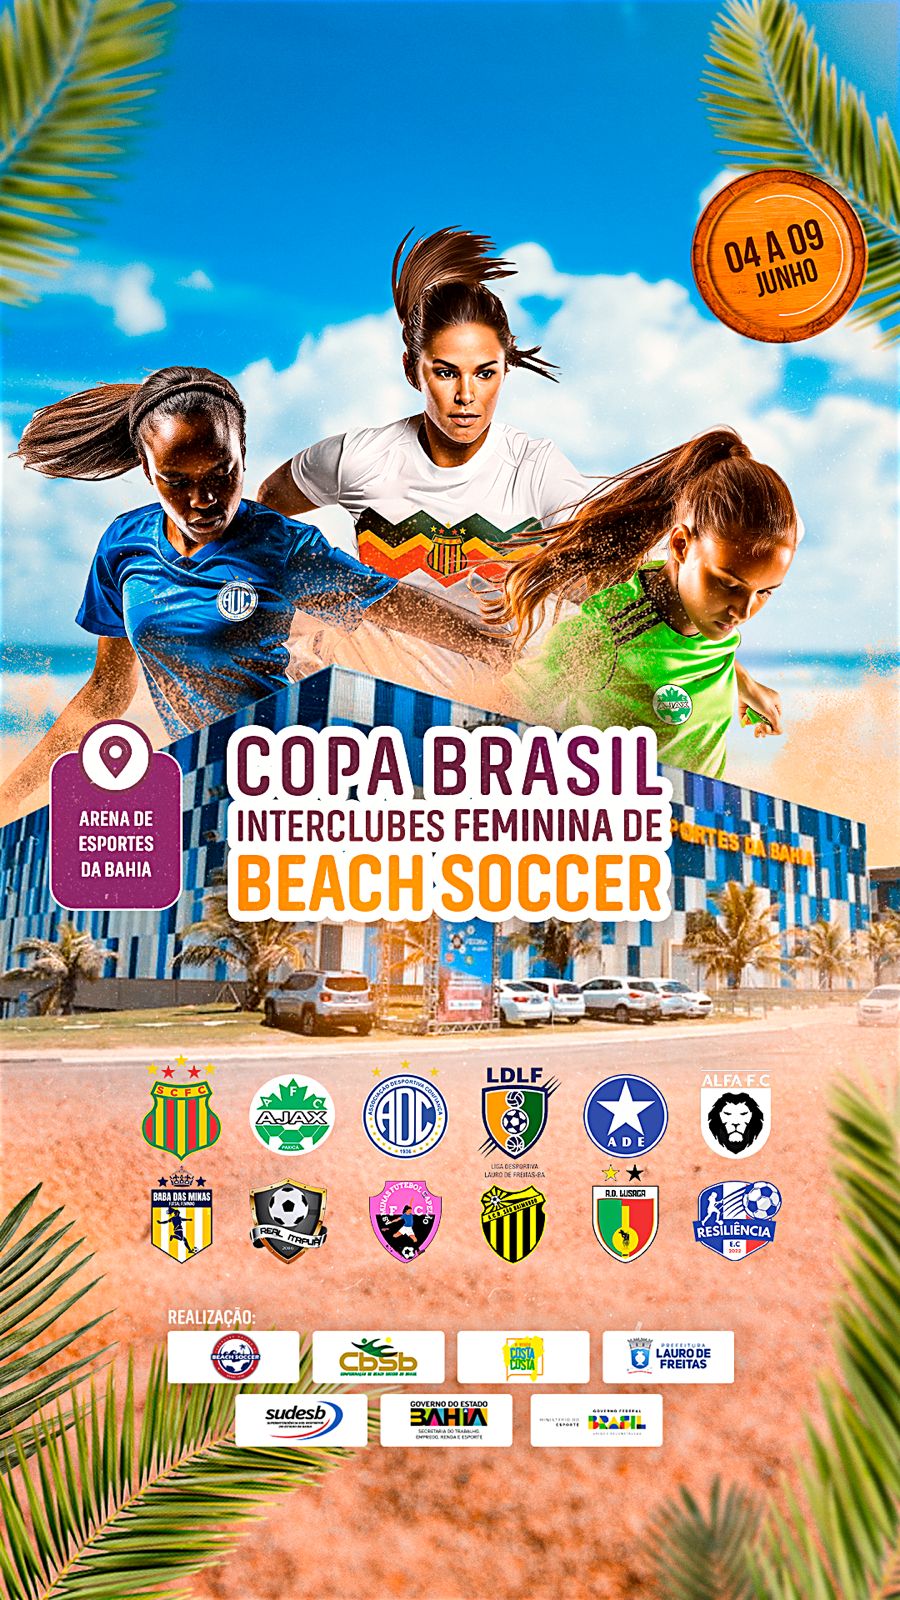 MCS organiza Copa Brasil Interclubes Feminina de Beach Soccer